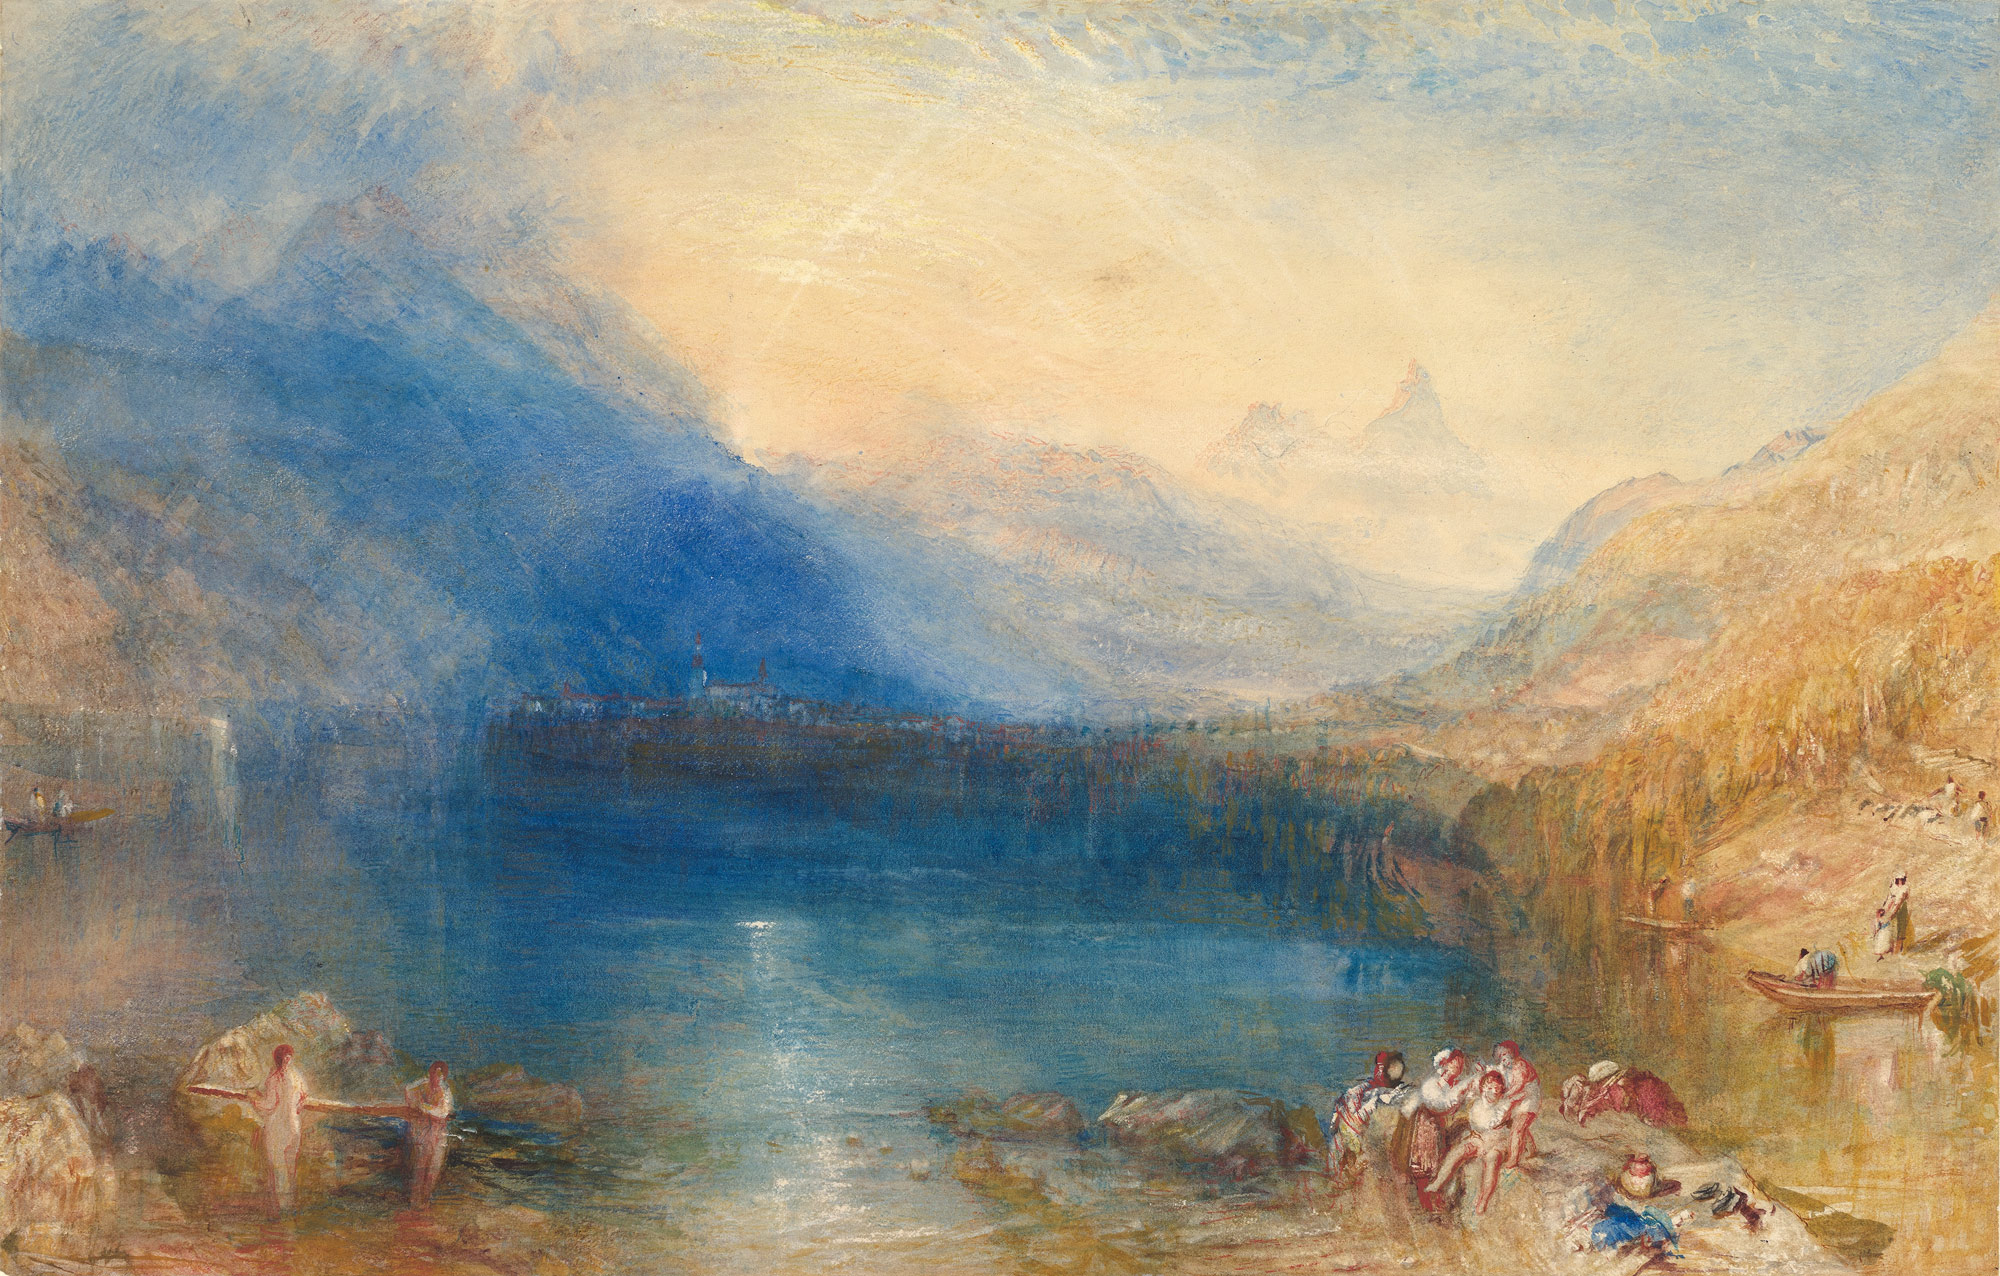 Der Zugersee by Joseph Mallord William Turner - 1843 - 29.85 x 46.67 cm Metropolitan Museum of Art